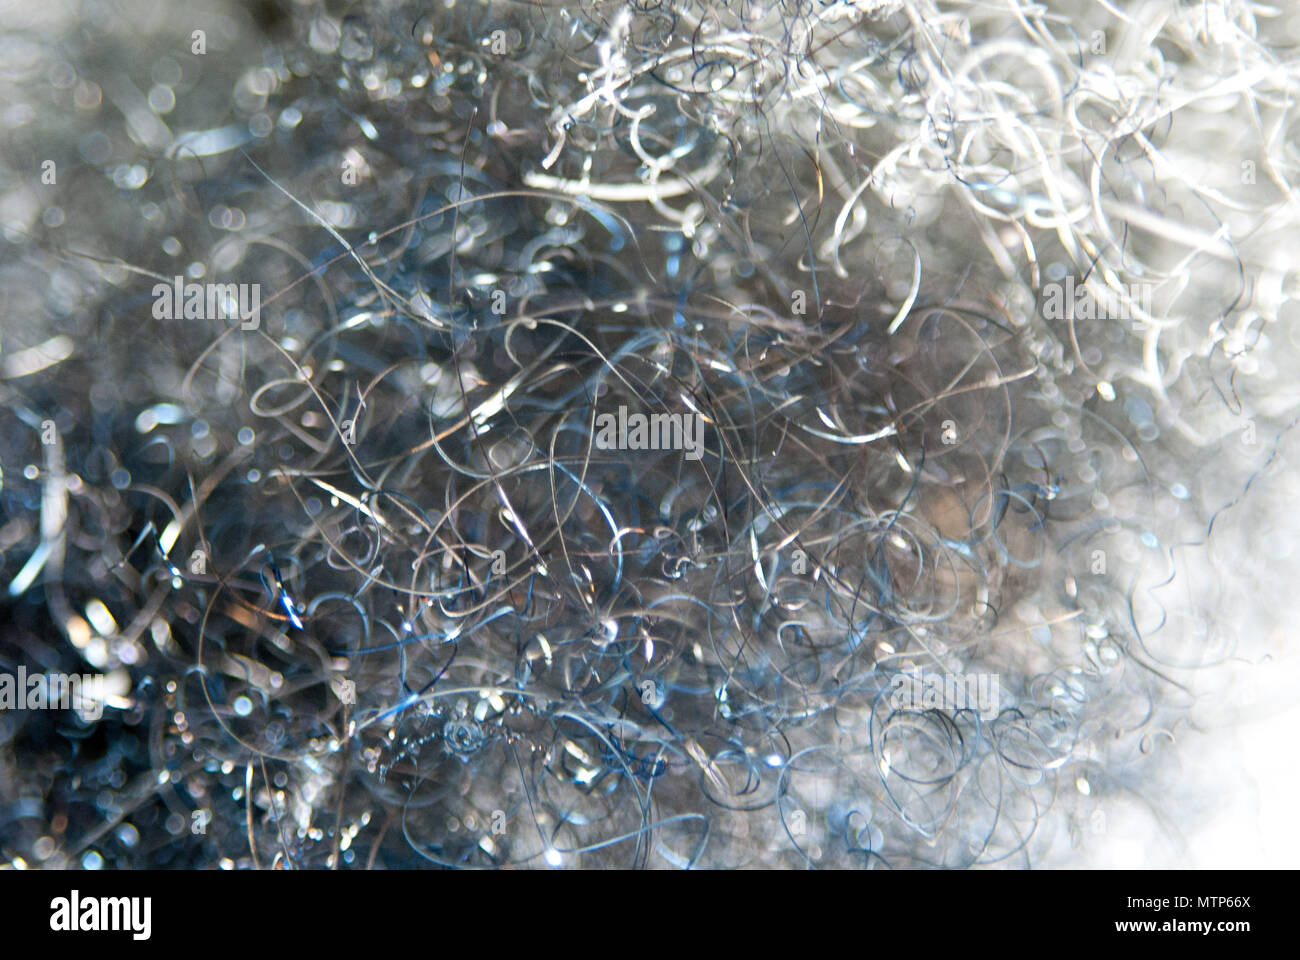 steel wool, turning lathe debris Stock Photo